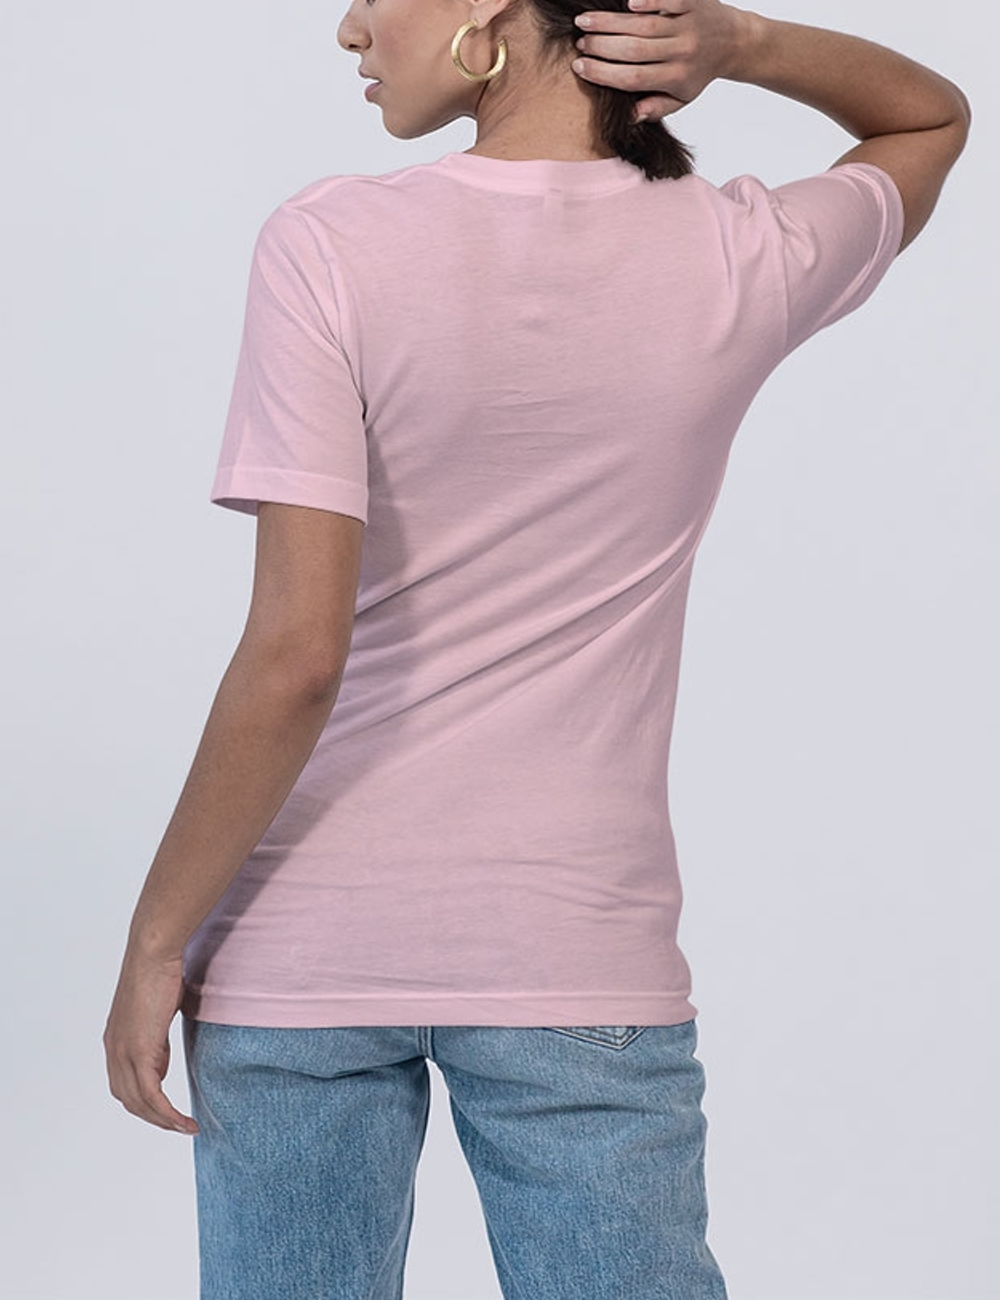 Wild & Free Women's Soft Jersey T-Shirt OniTakai